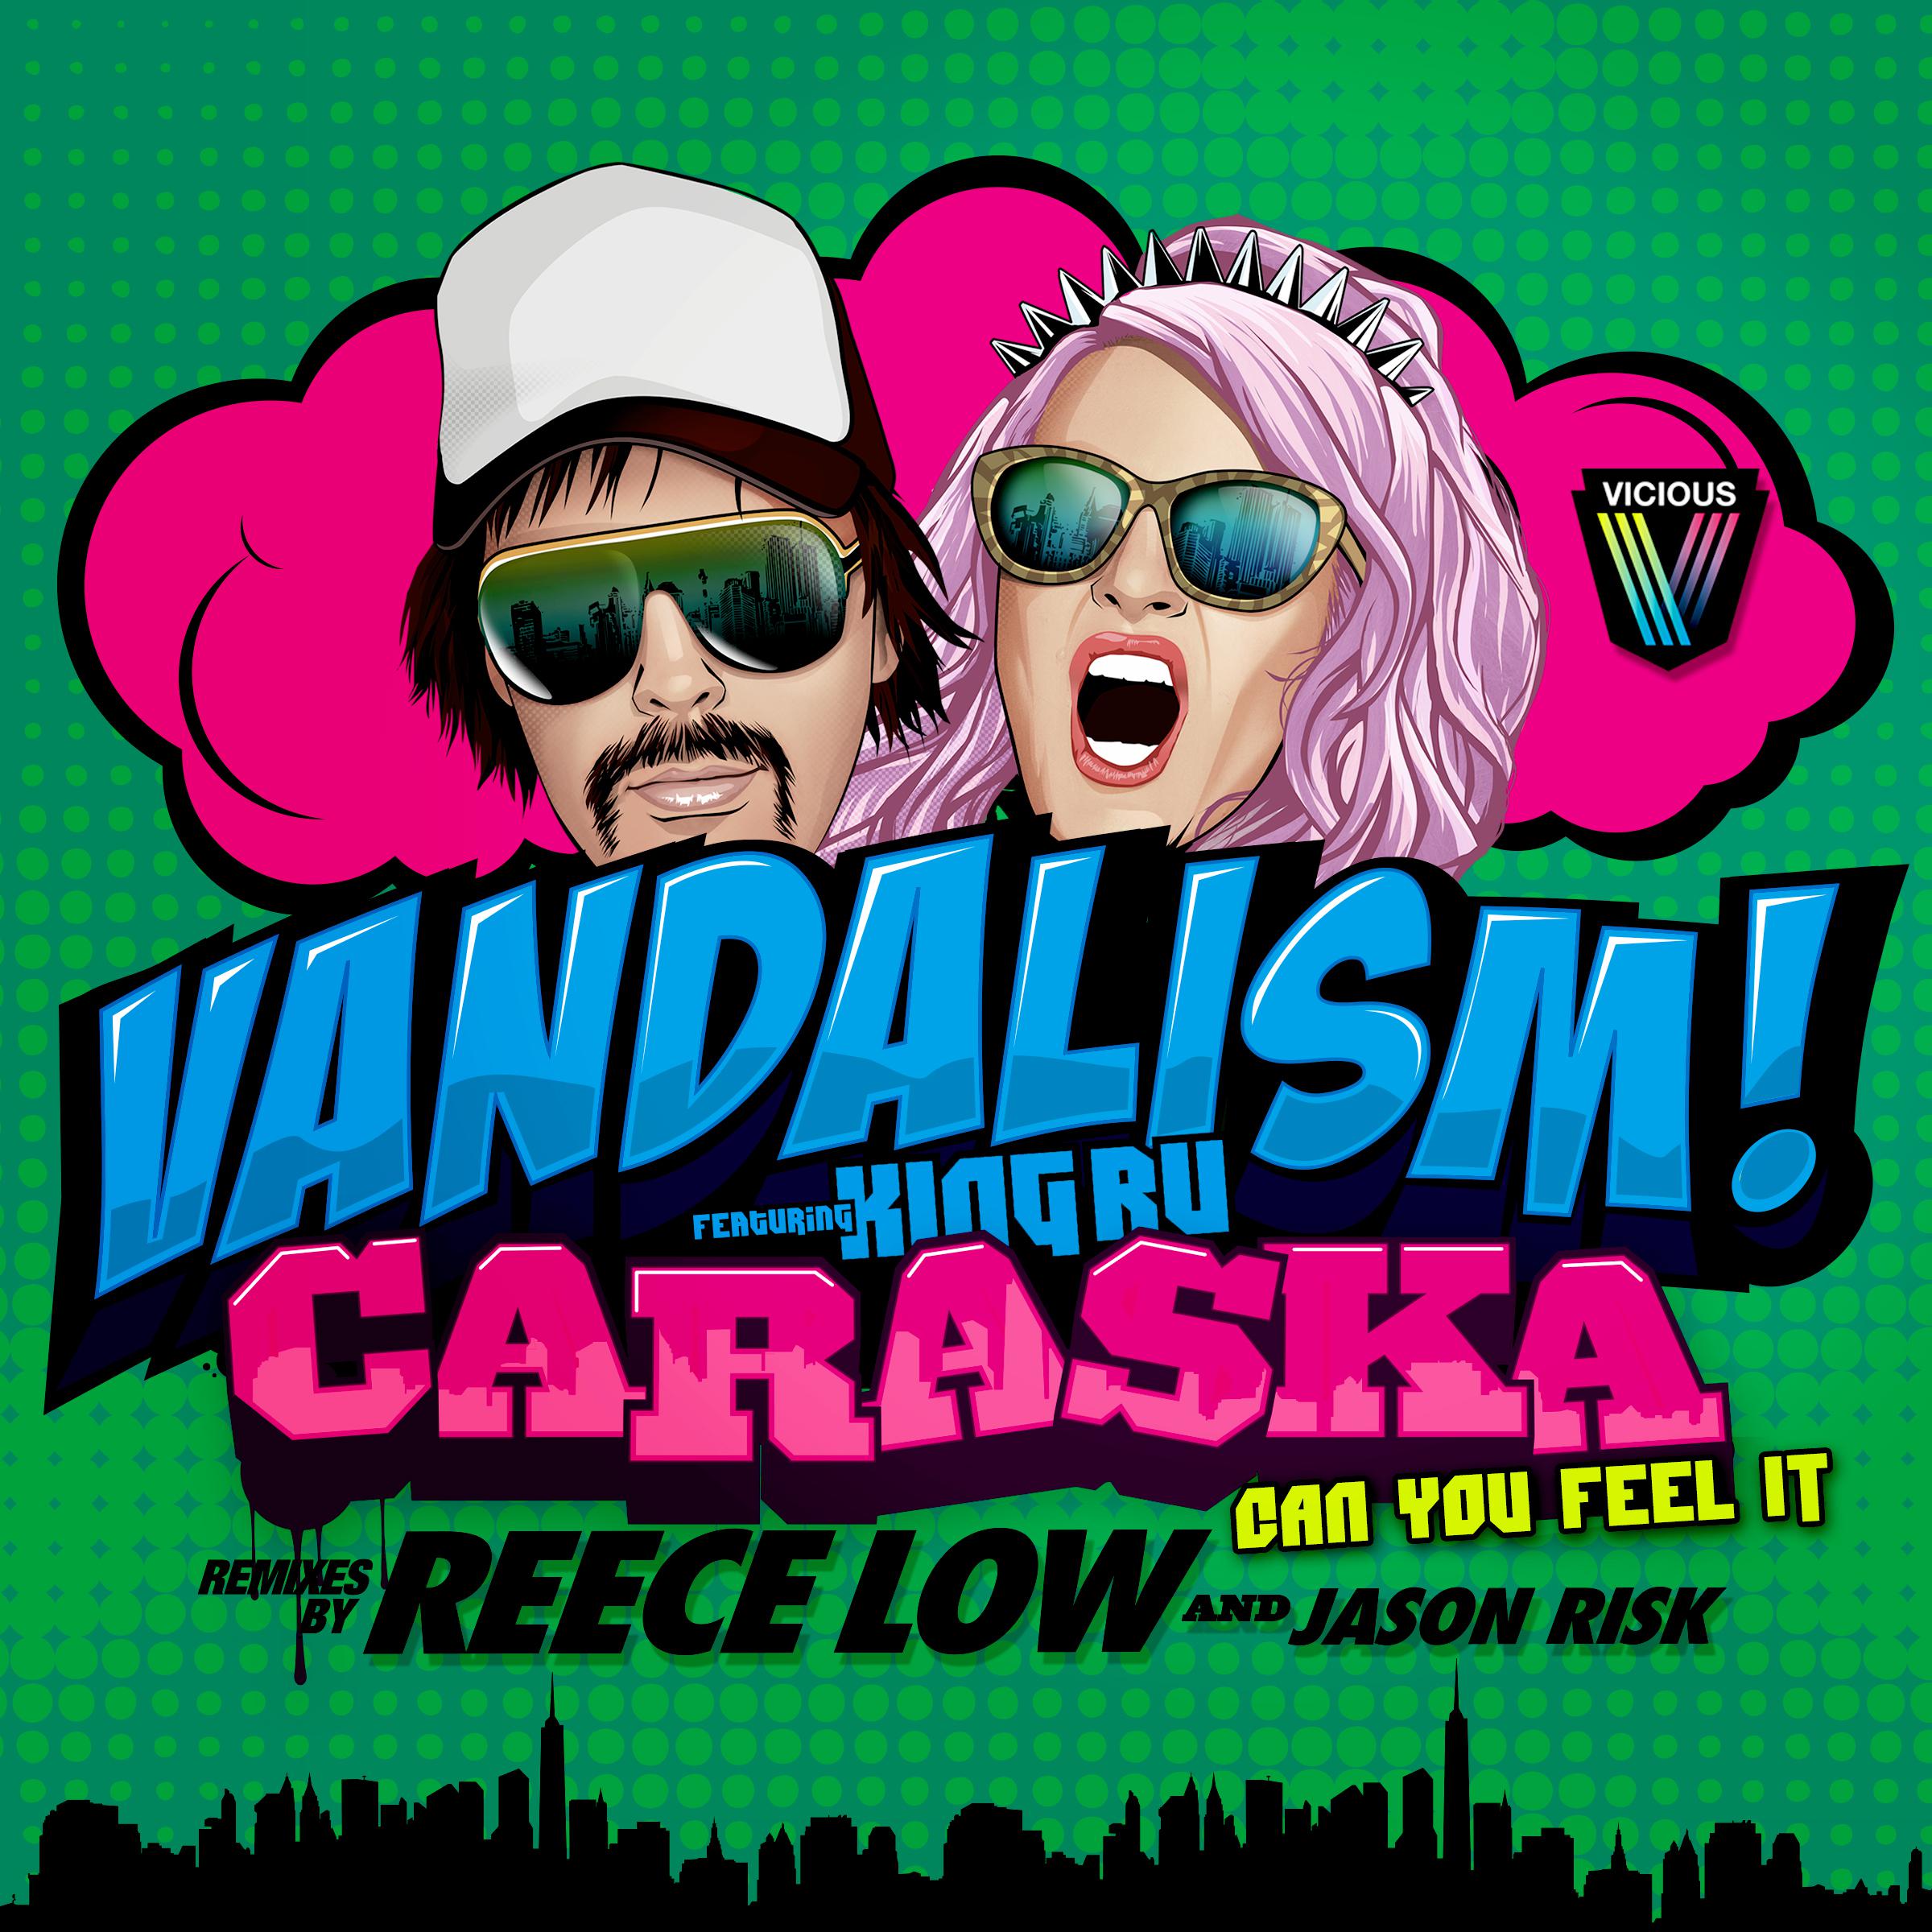 Vandalism - Caraska [Can You Feel It] (Reece Low Remix)